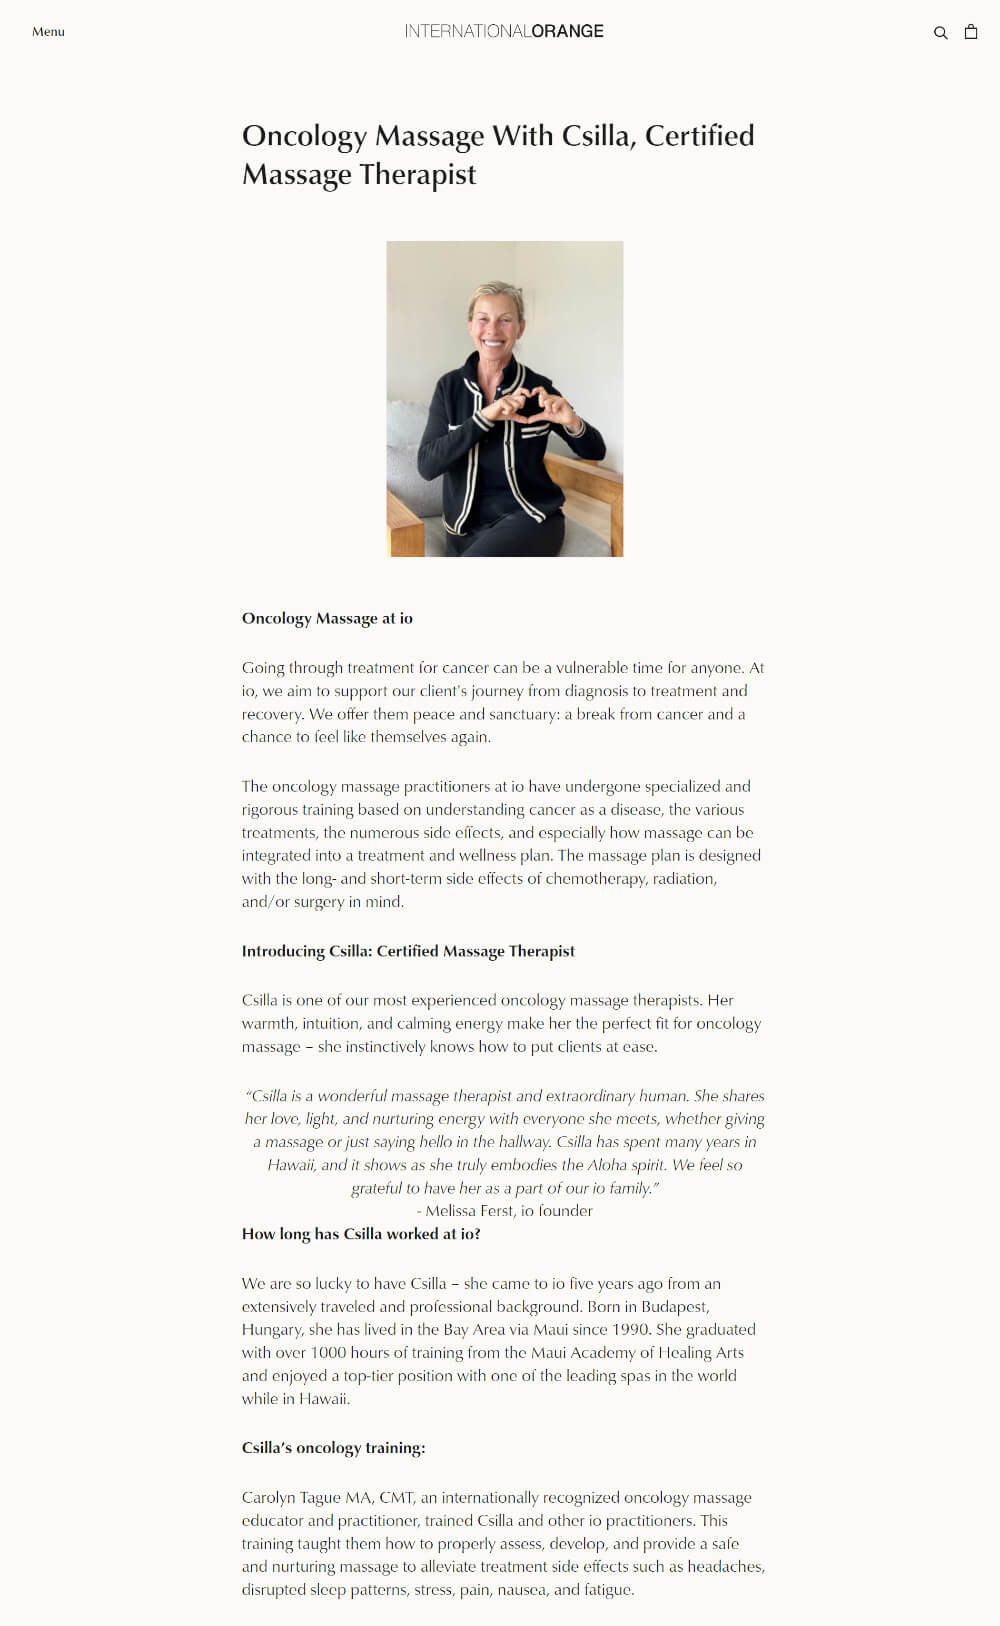 Oncology Massage article for International Orange